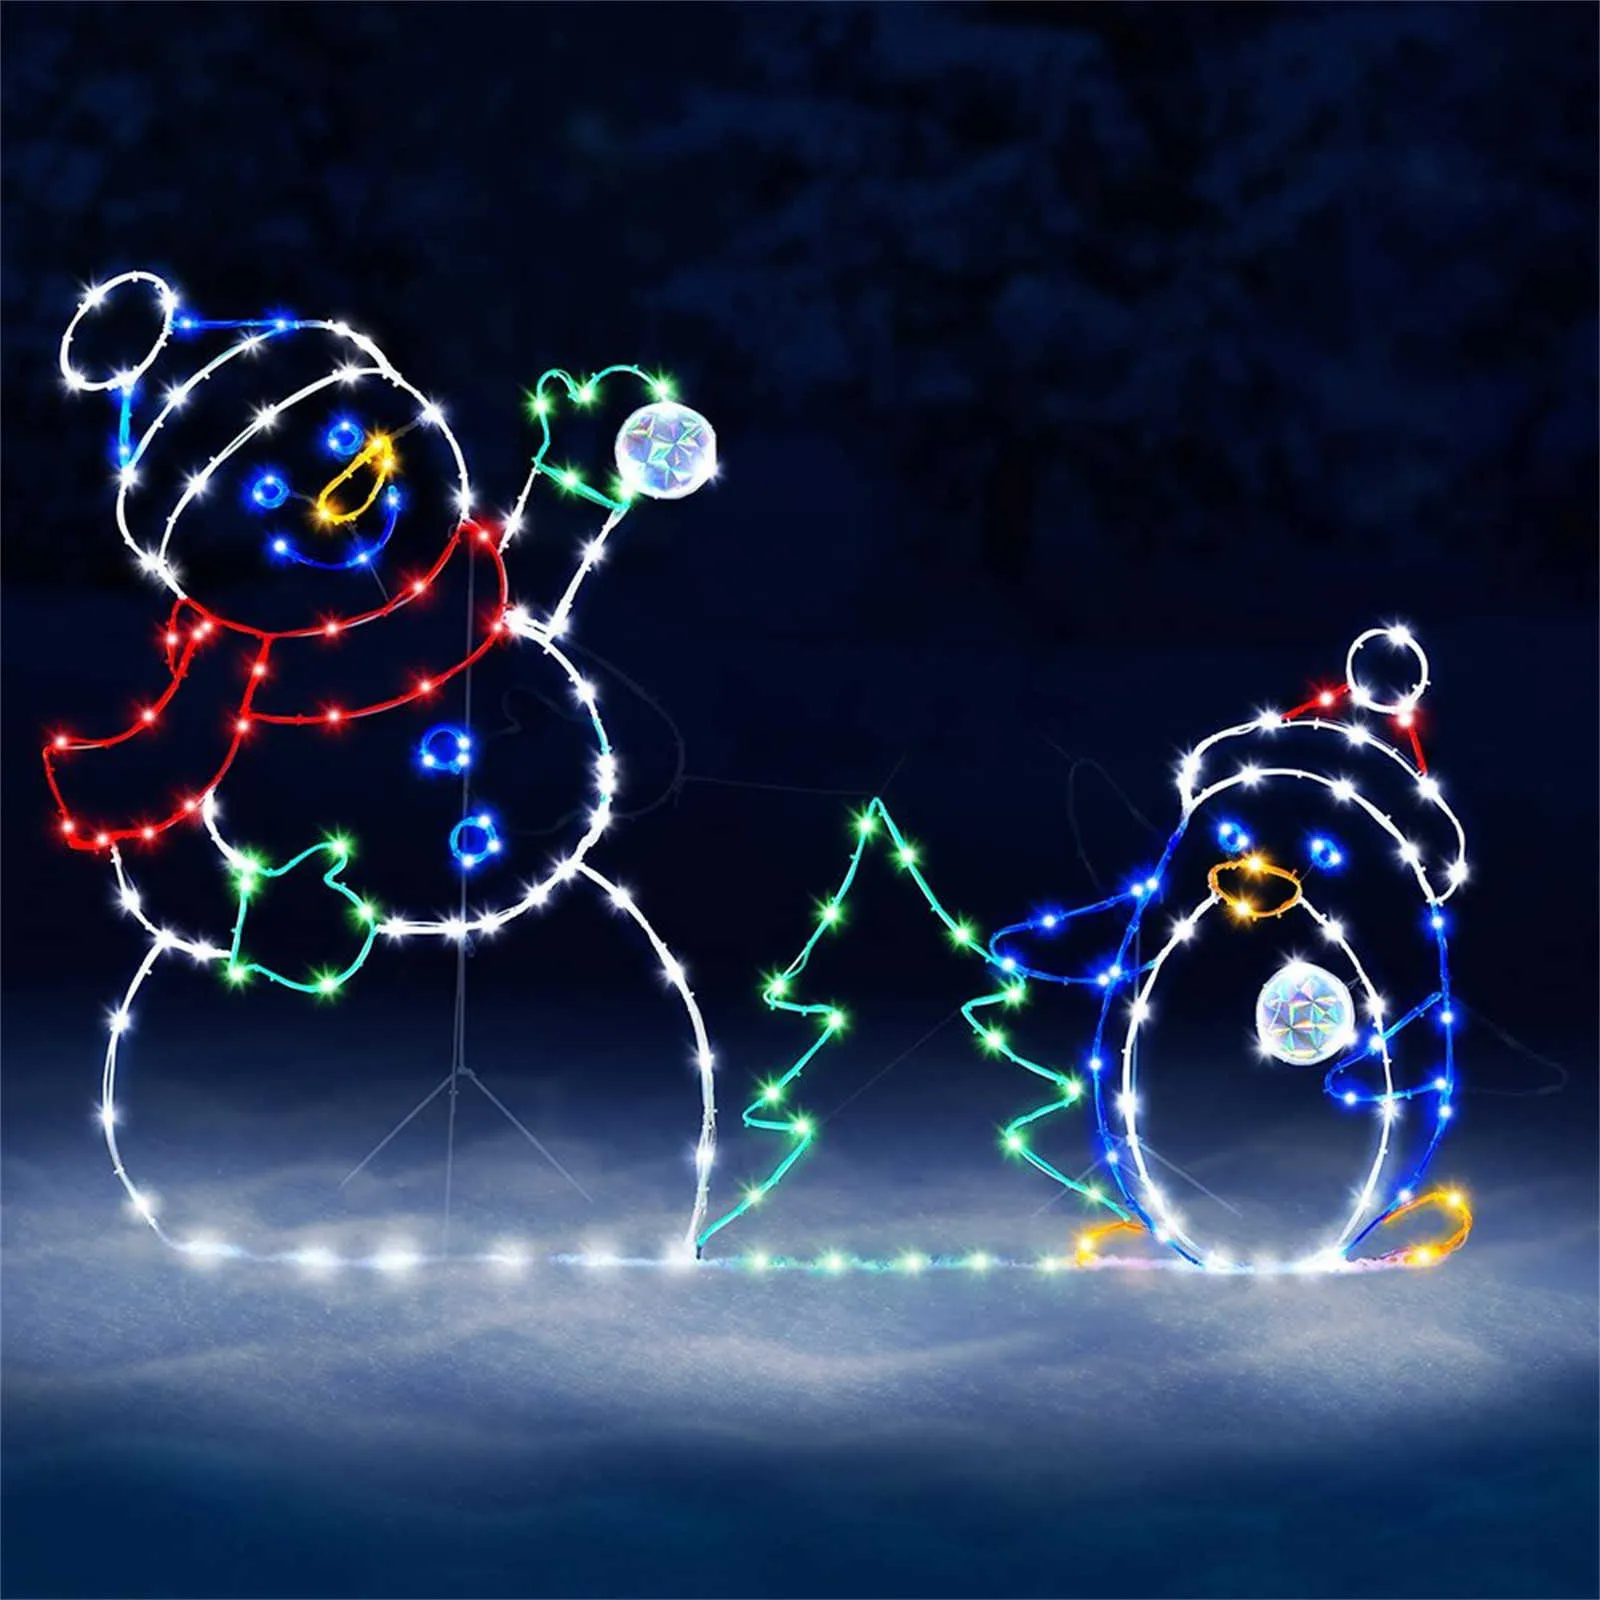 Active Light String Frame Decor Funny Animated Snowball Fight Christmas Yard Decoration Outdoor Santa Landscape Ornament Navidad2784